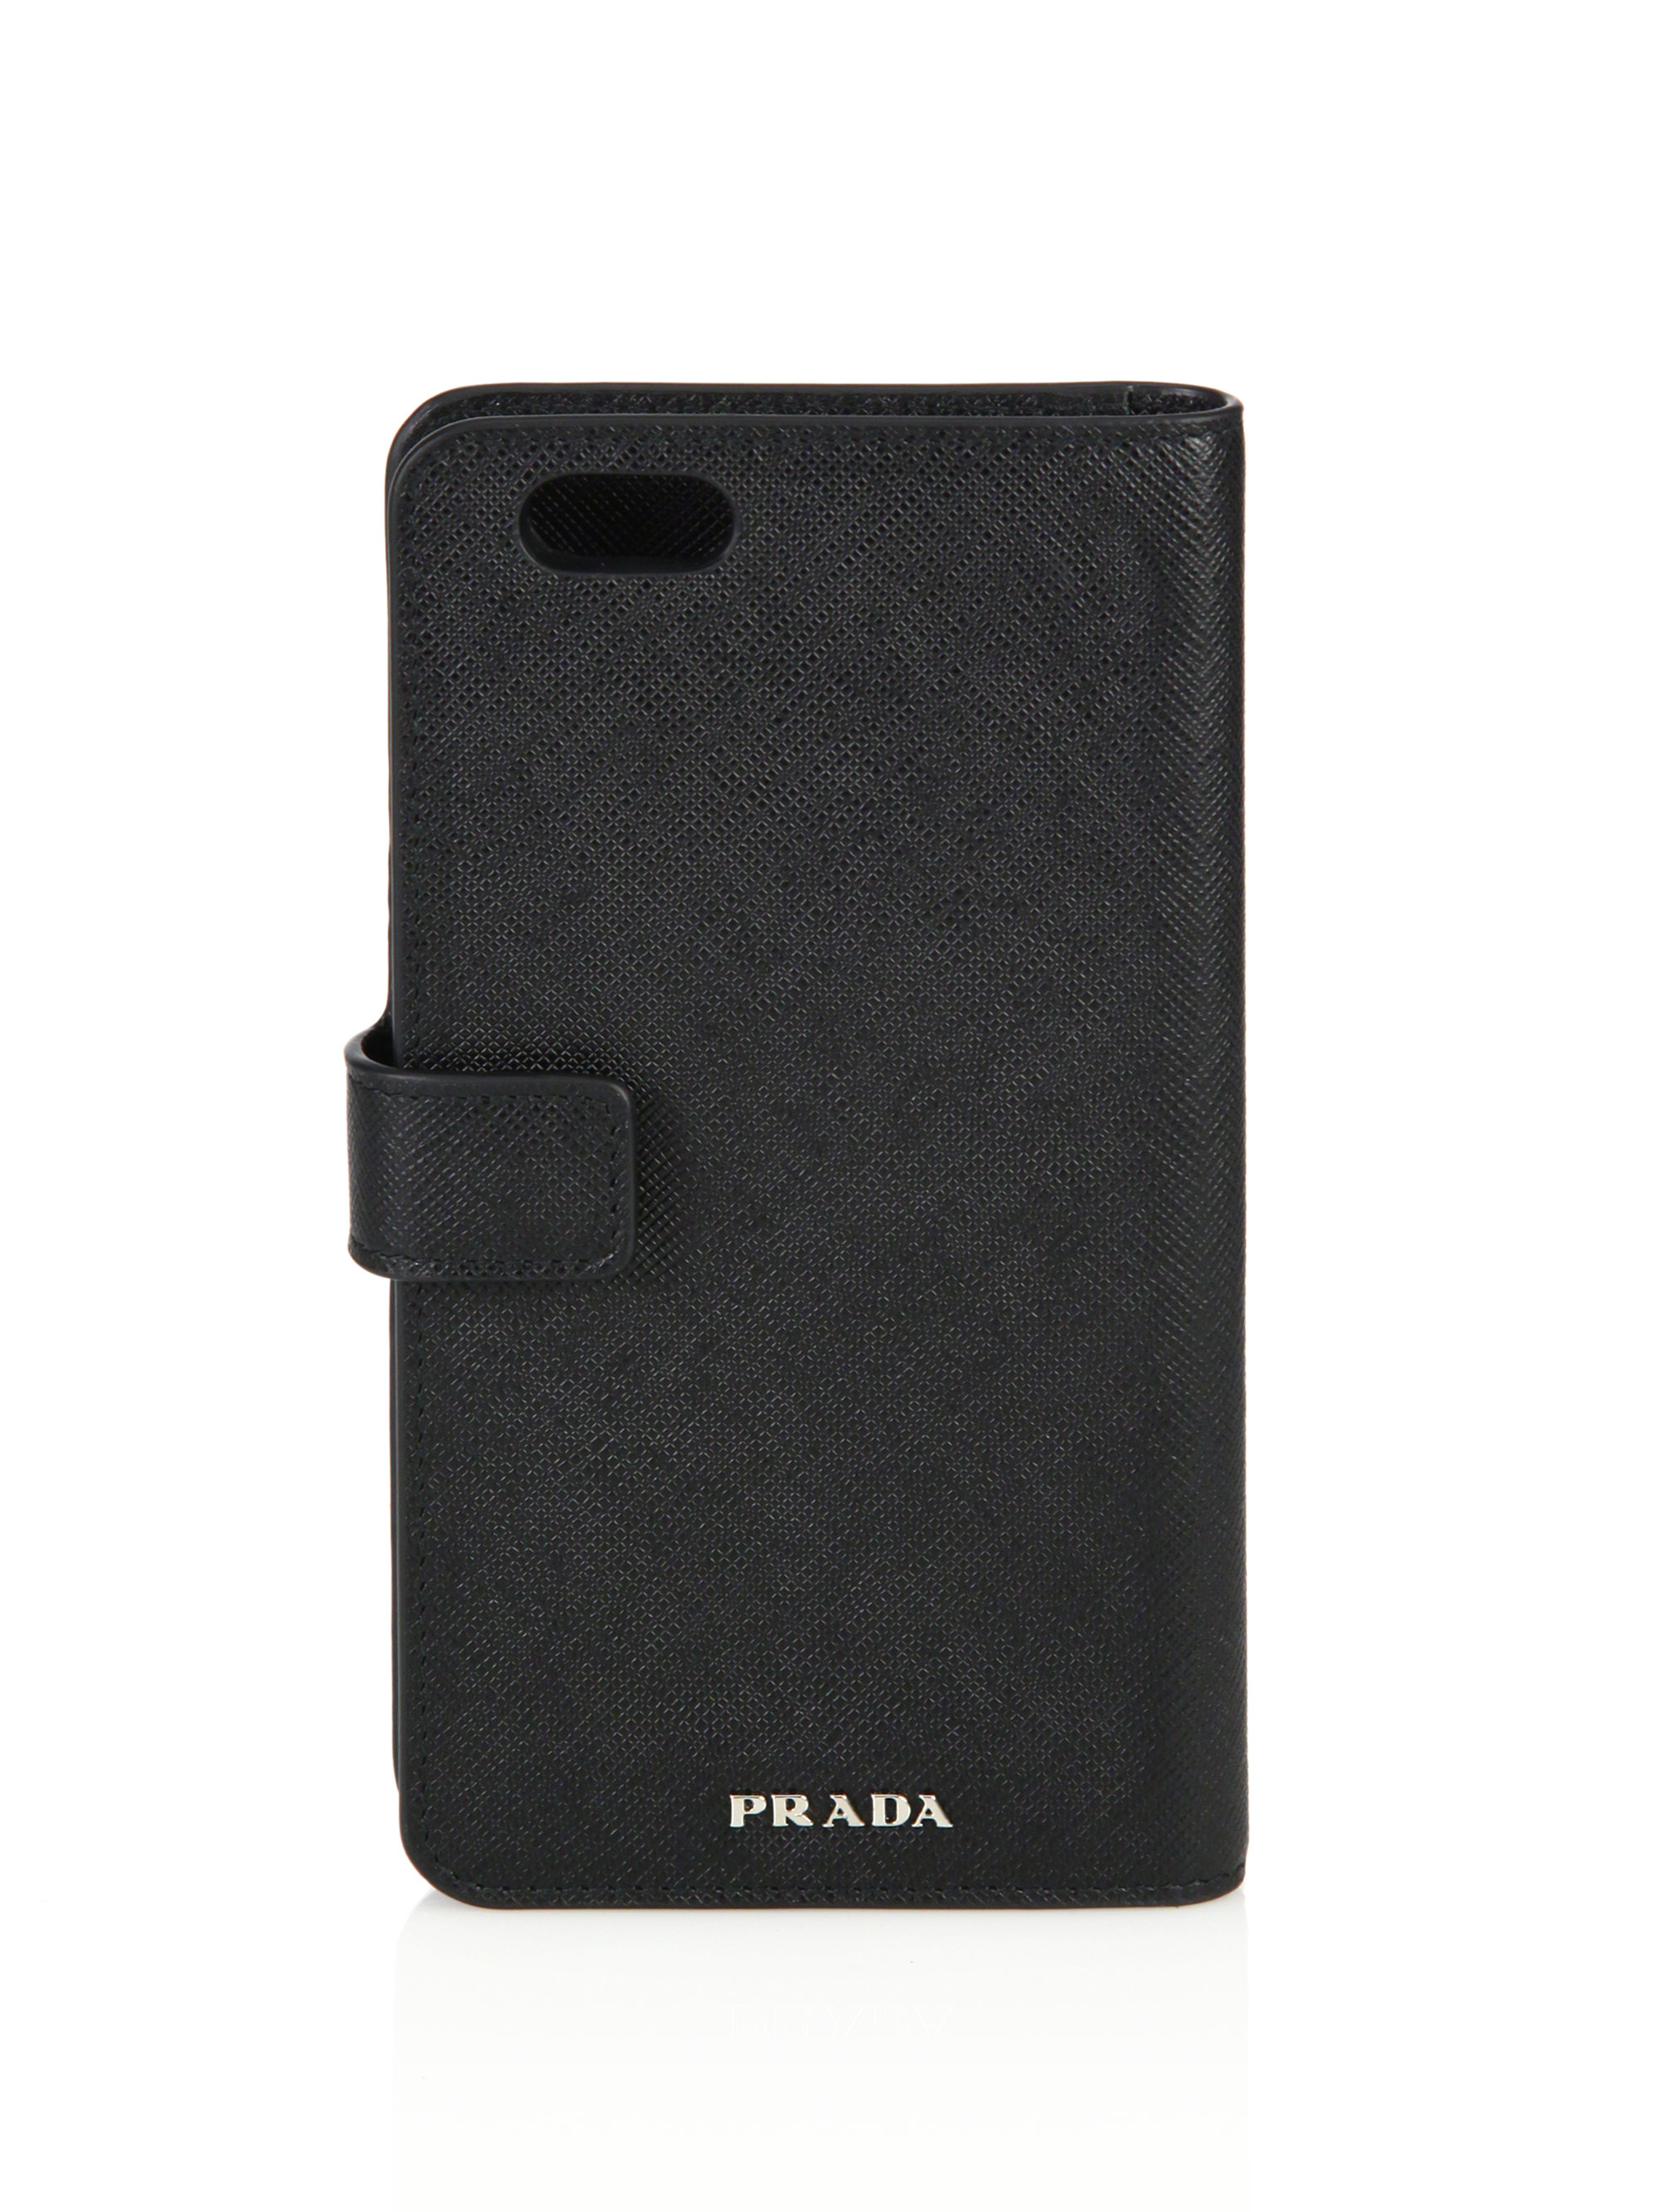 prada iphone 8 wallet case, OFF 70%,www.amarkotarim.com.tr